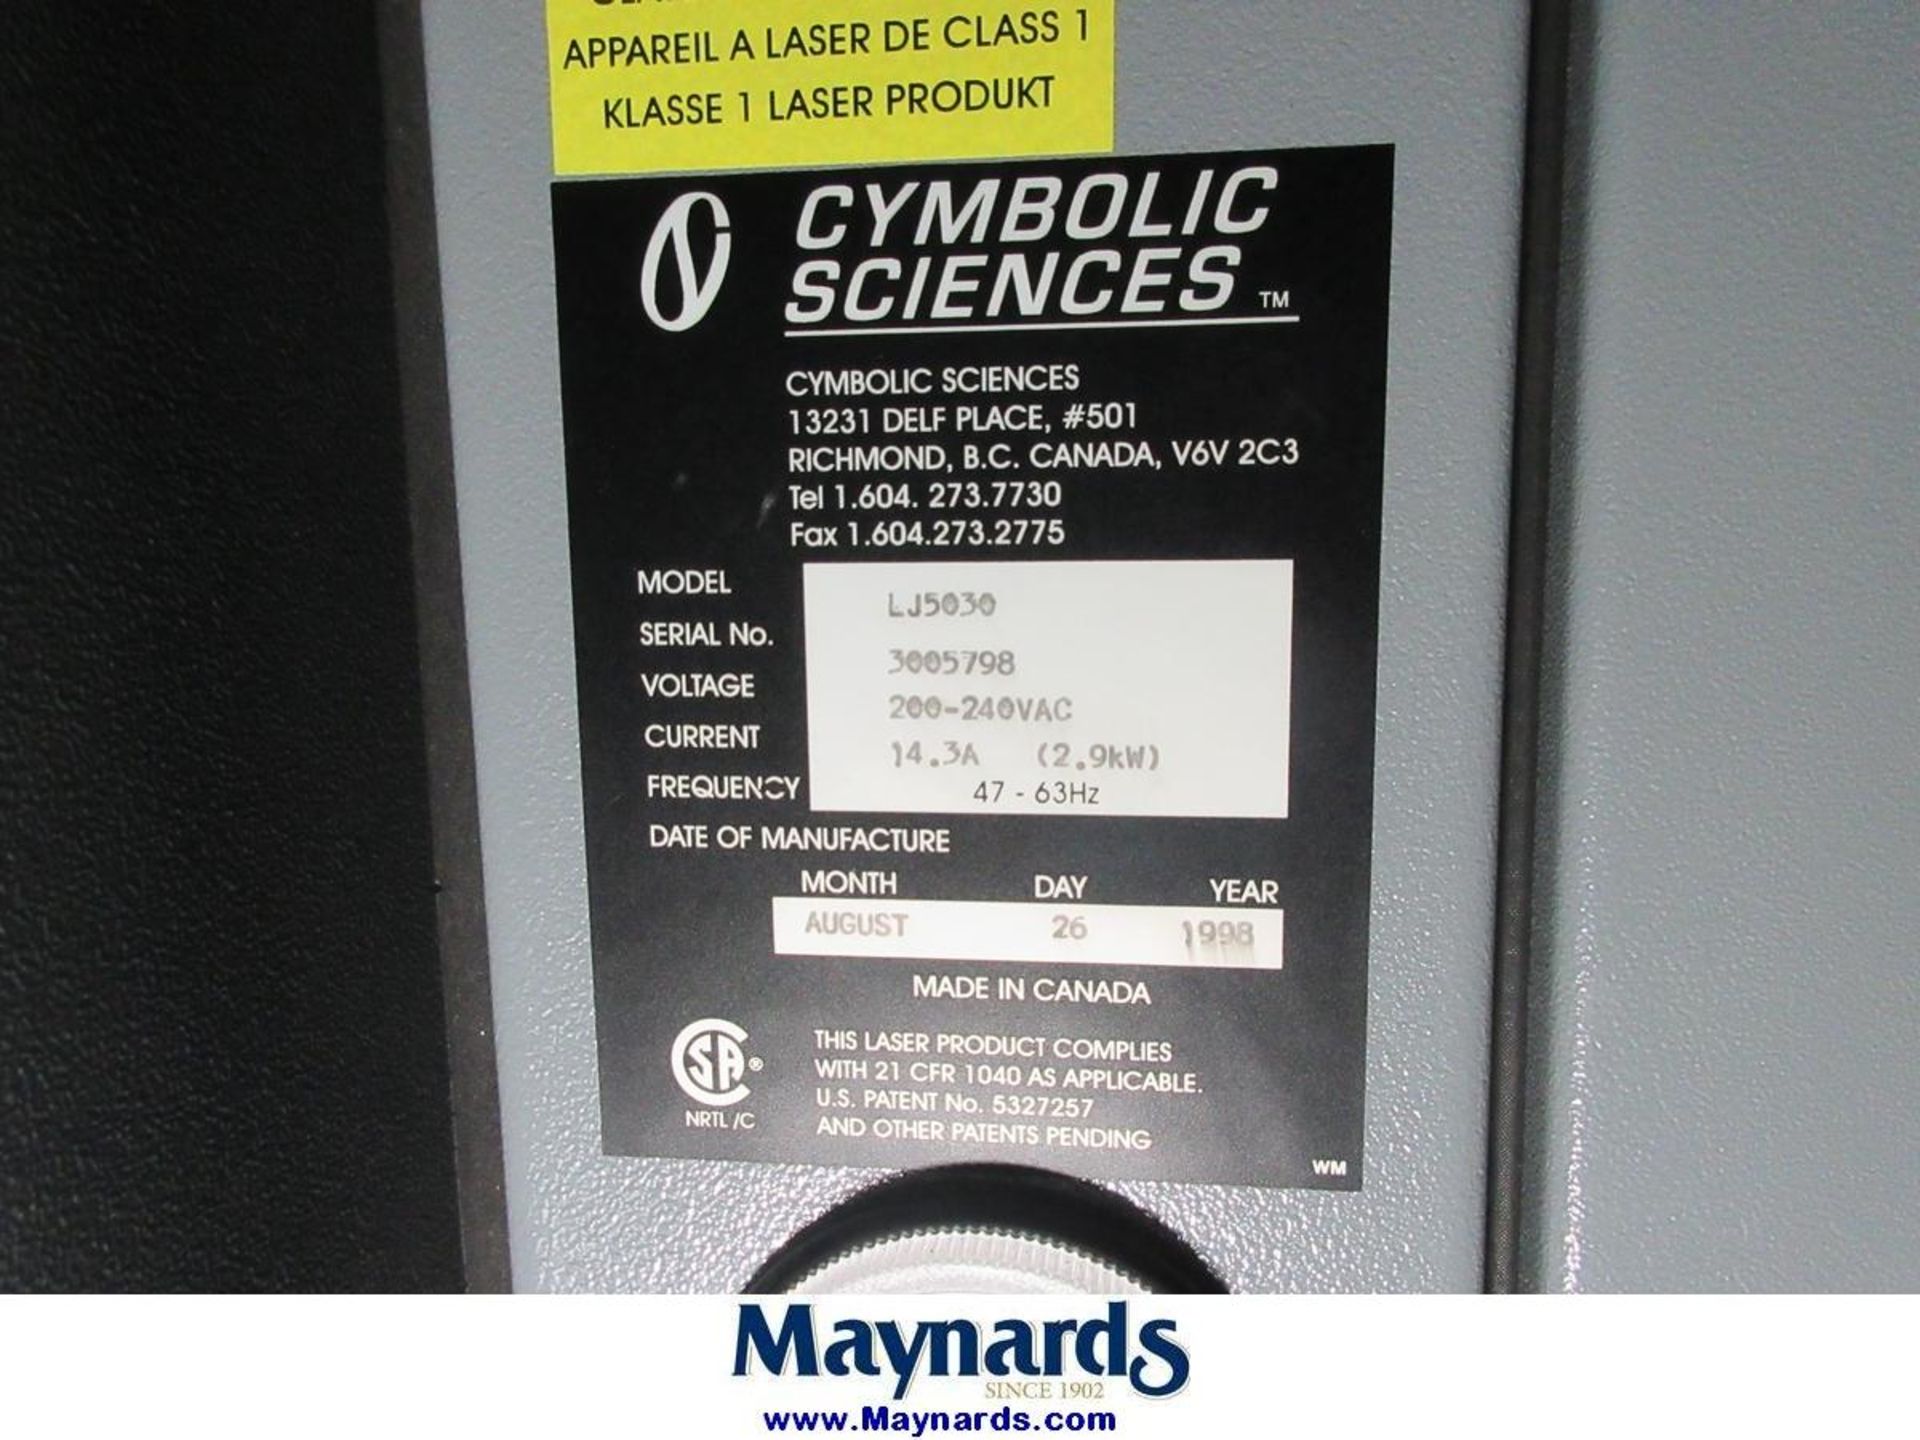 Cymbolic Sciences LightJet 5030 Photographic Paper and Film Printer - Image 4 of 4